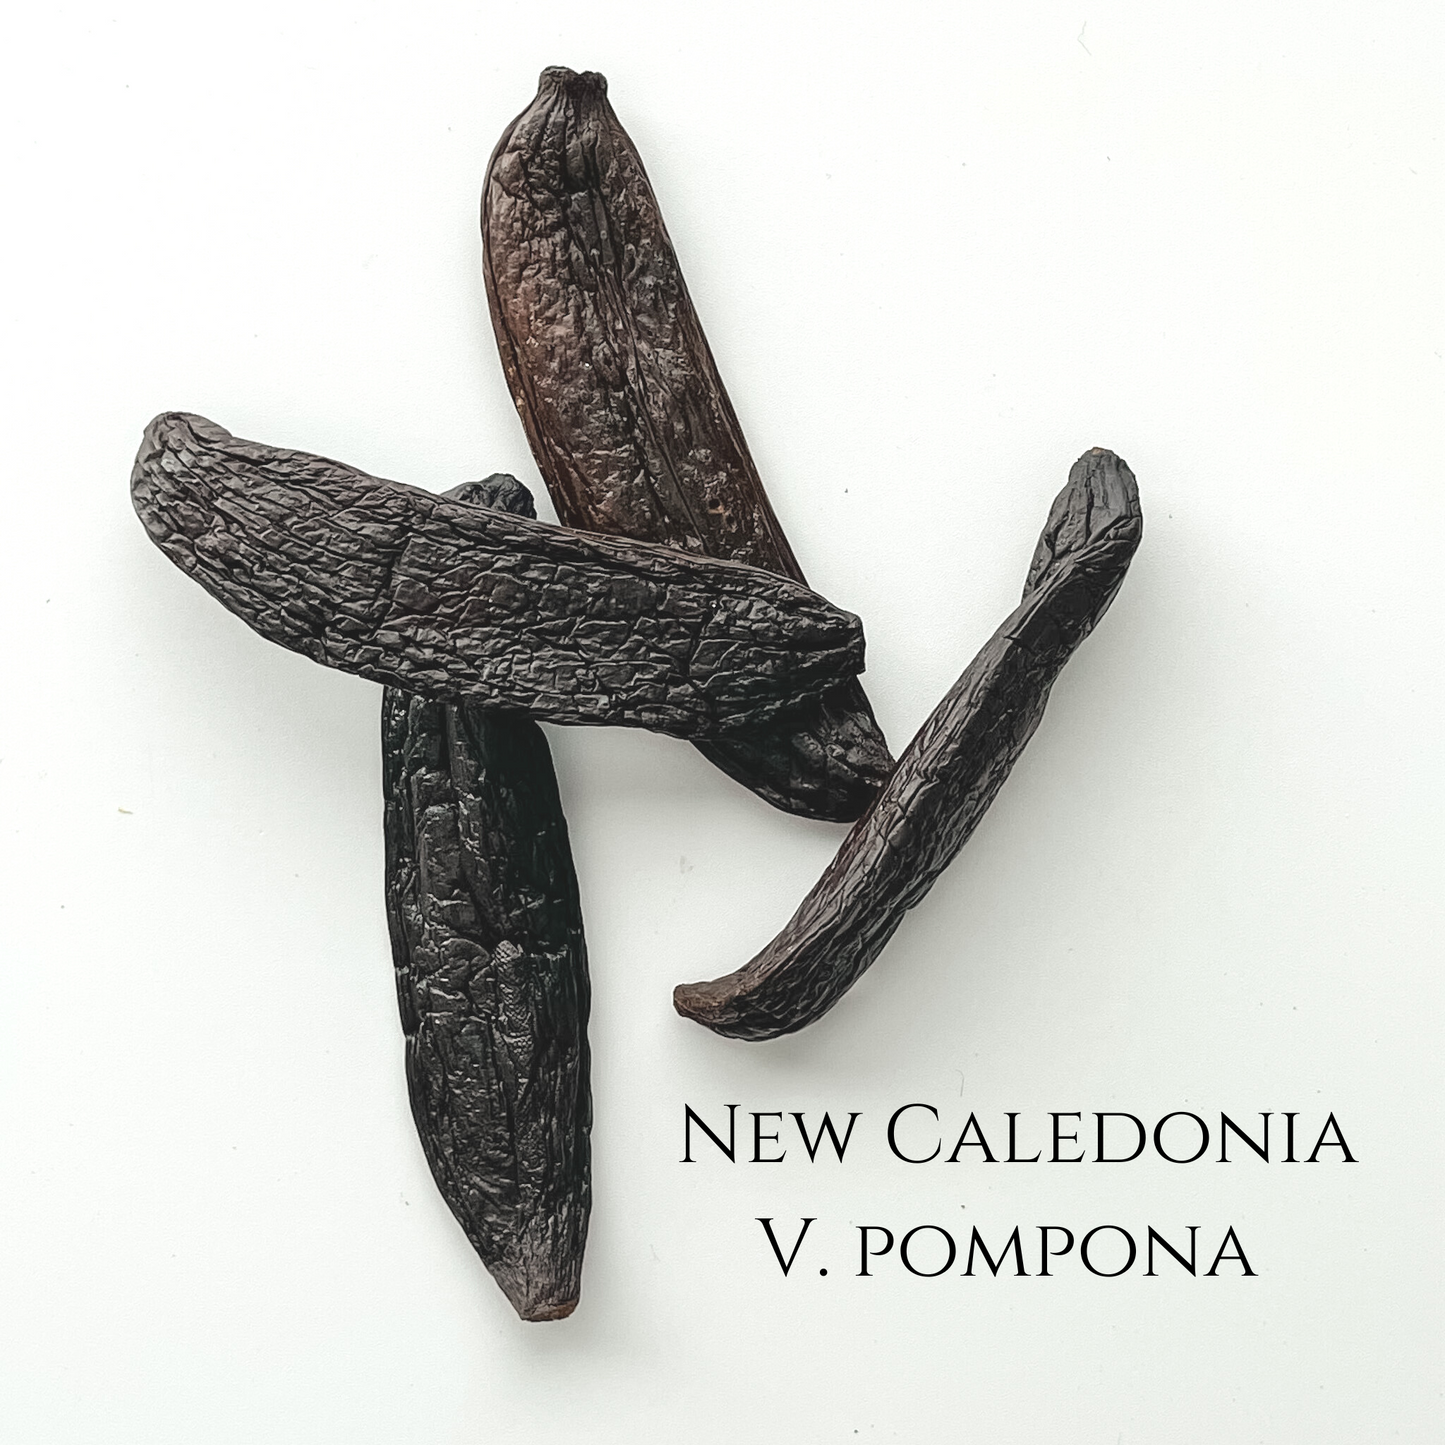 New Caledonia V. pompona